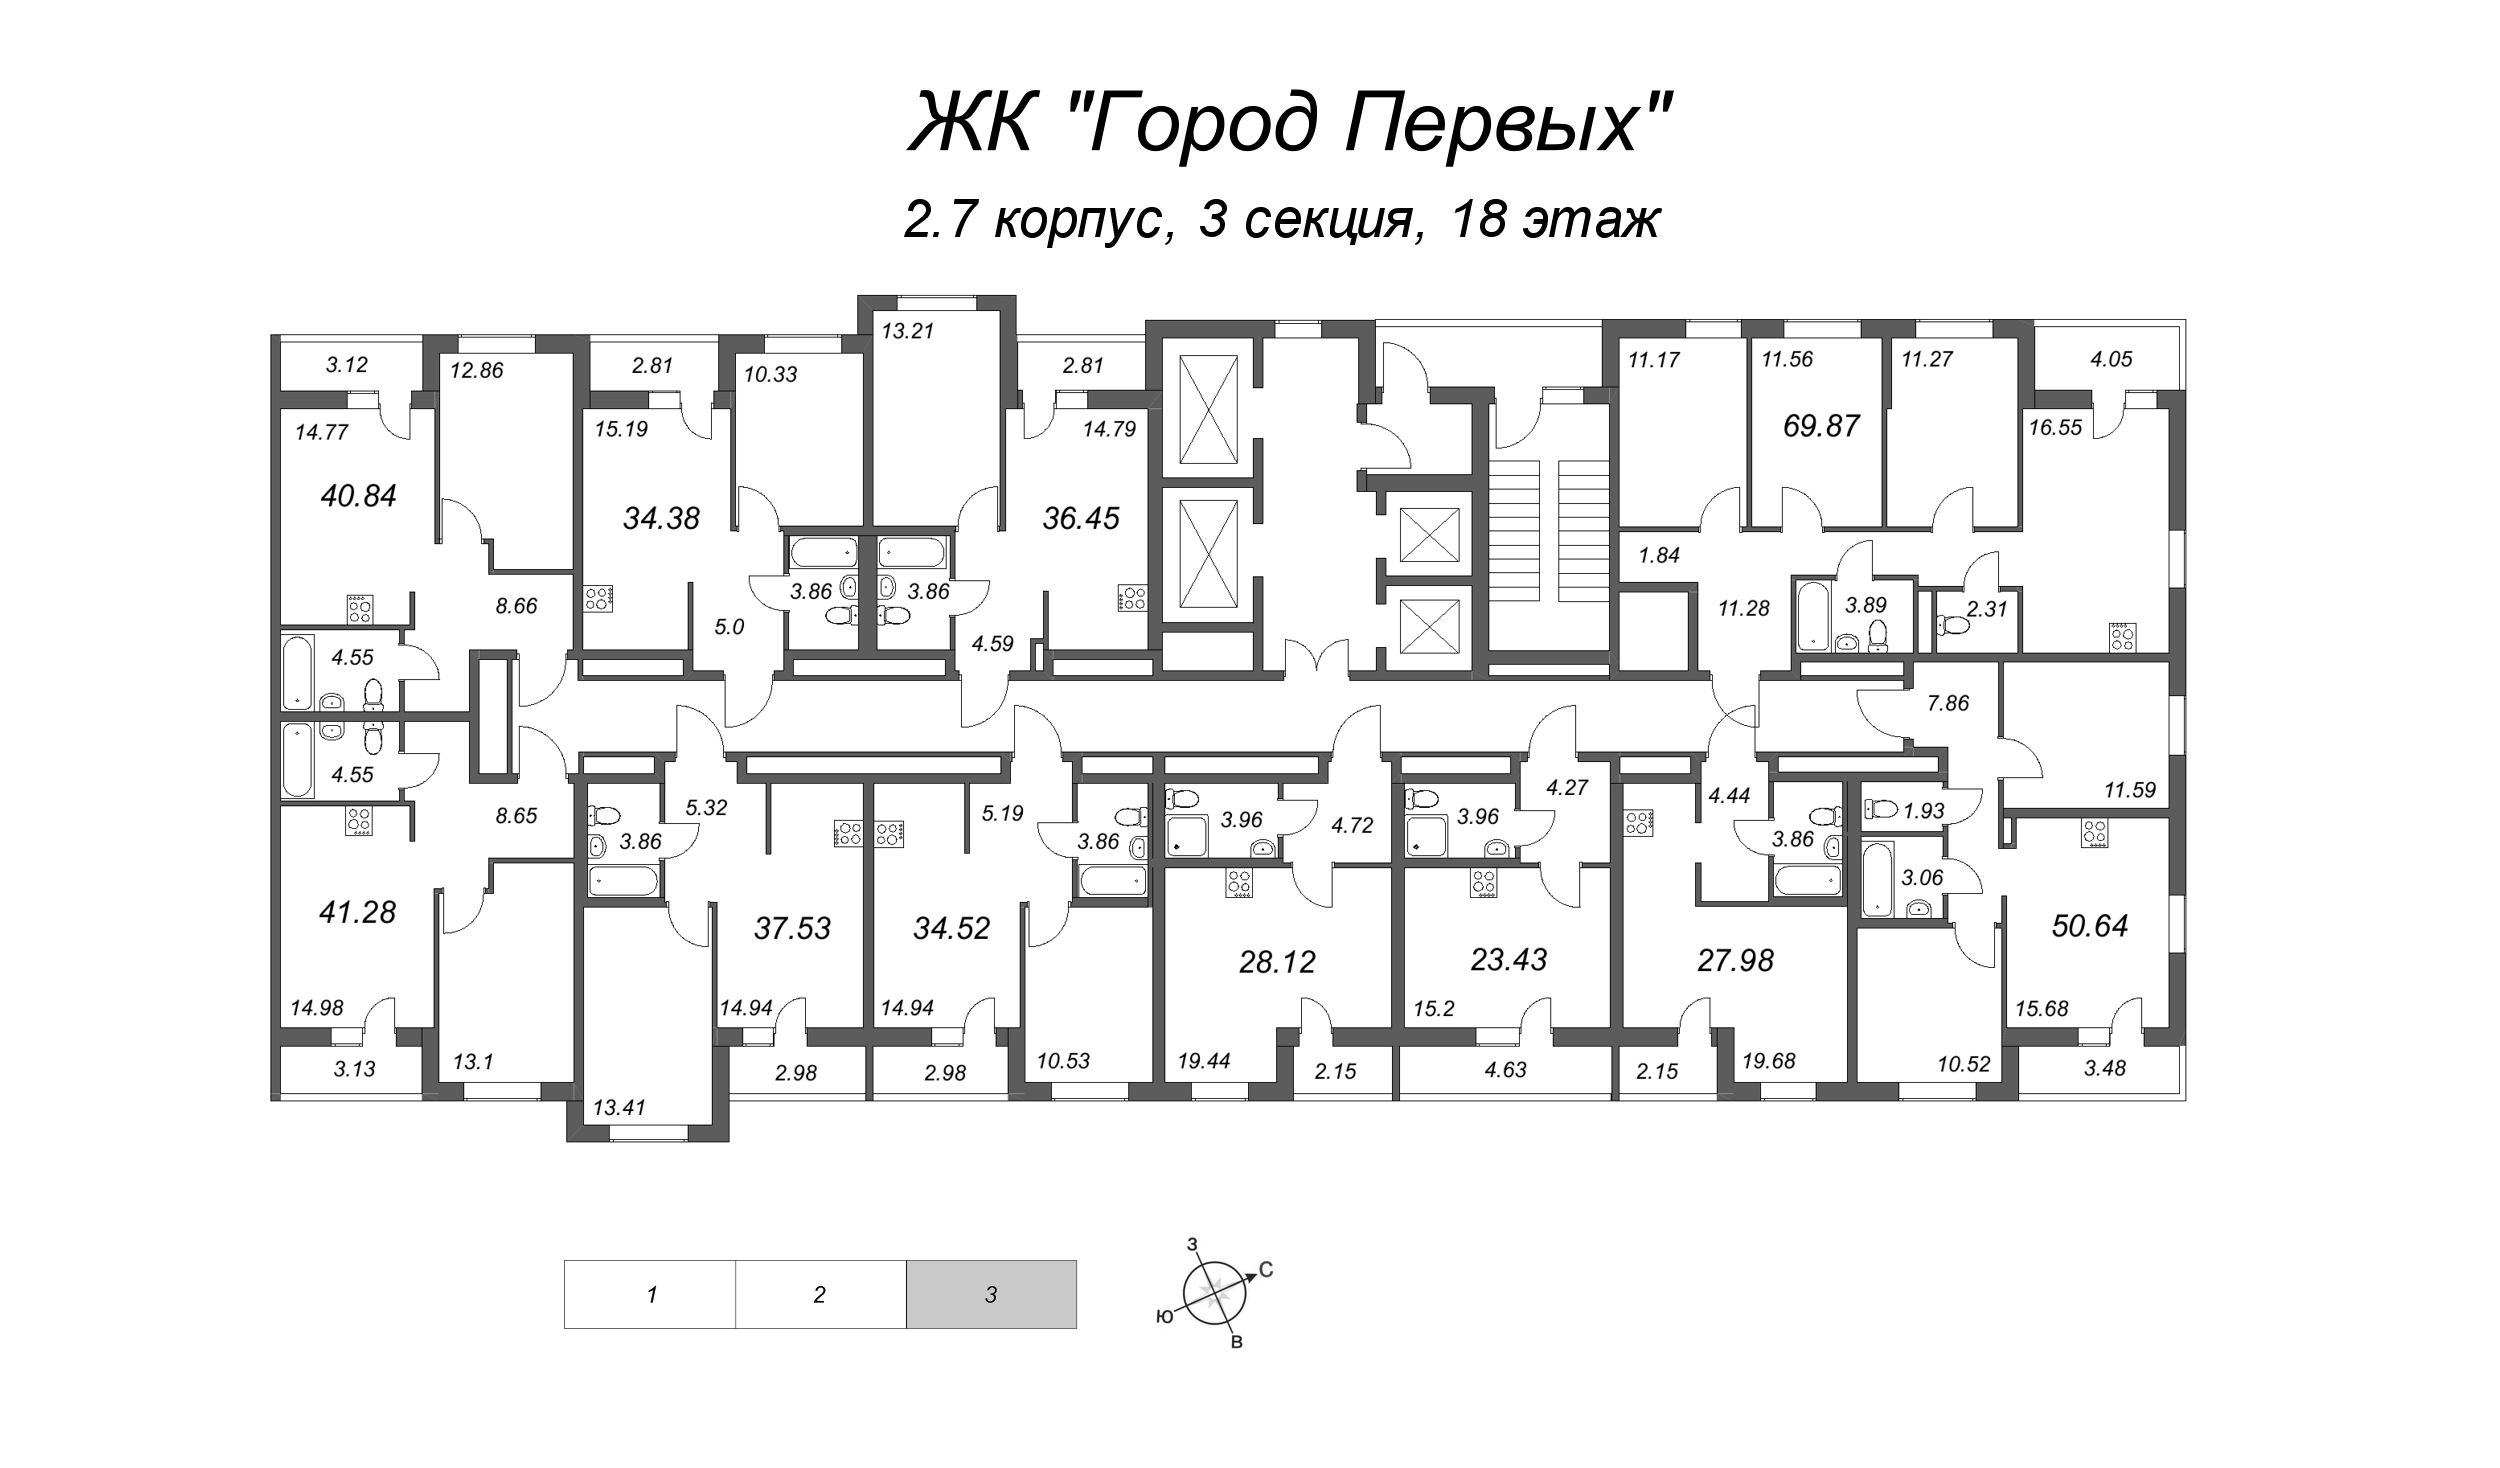 2-комнатная (Евро) квартира, 36.88 м² - планировка этажа